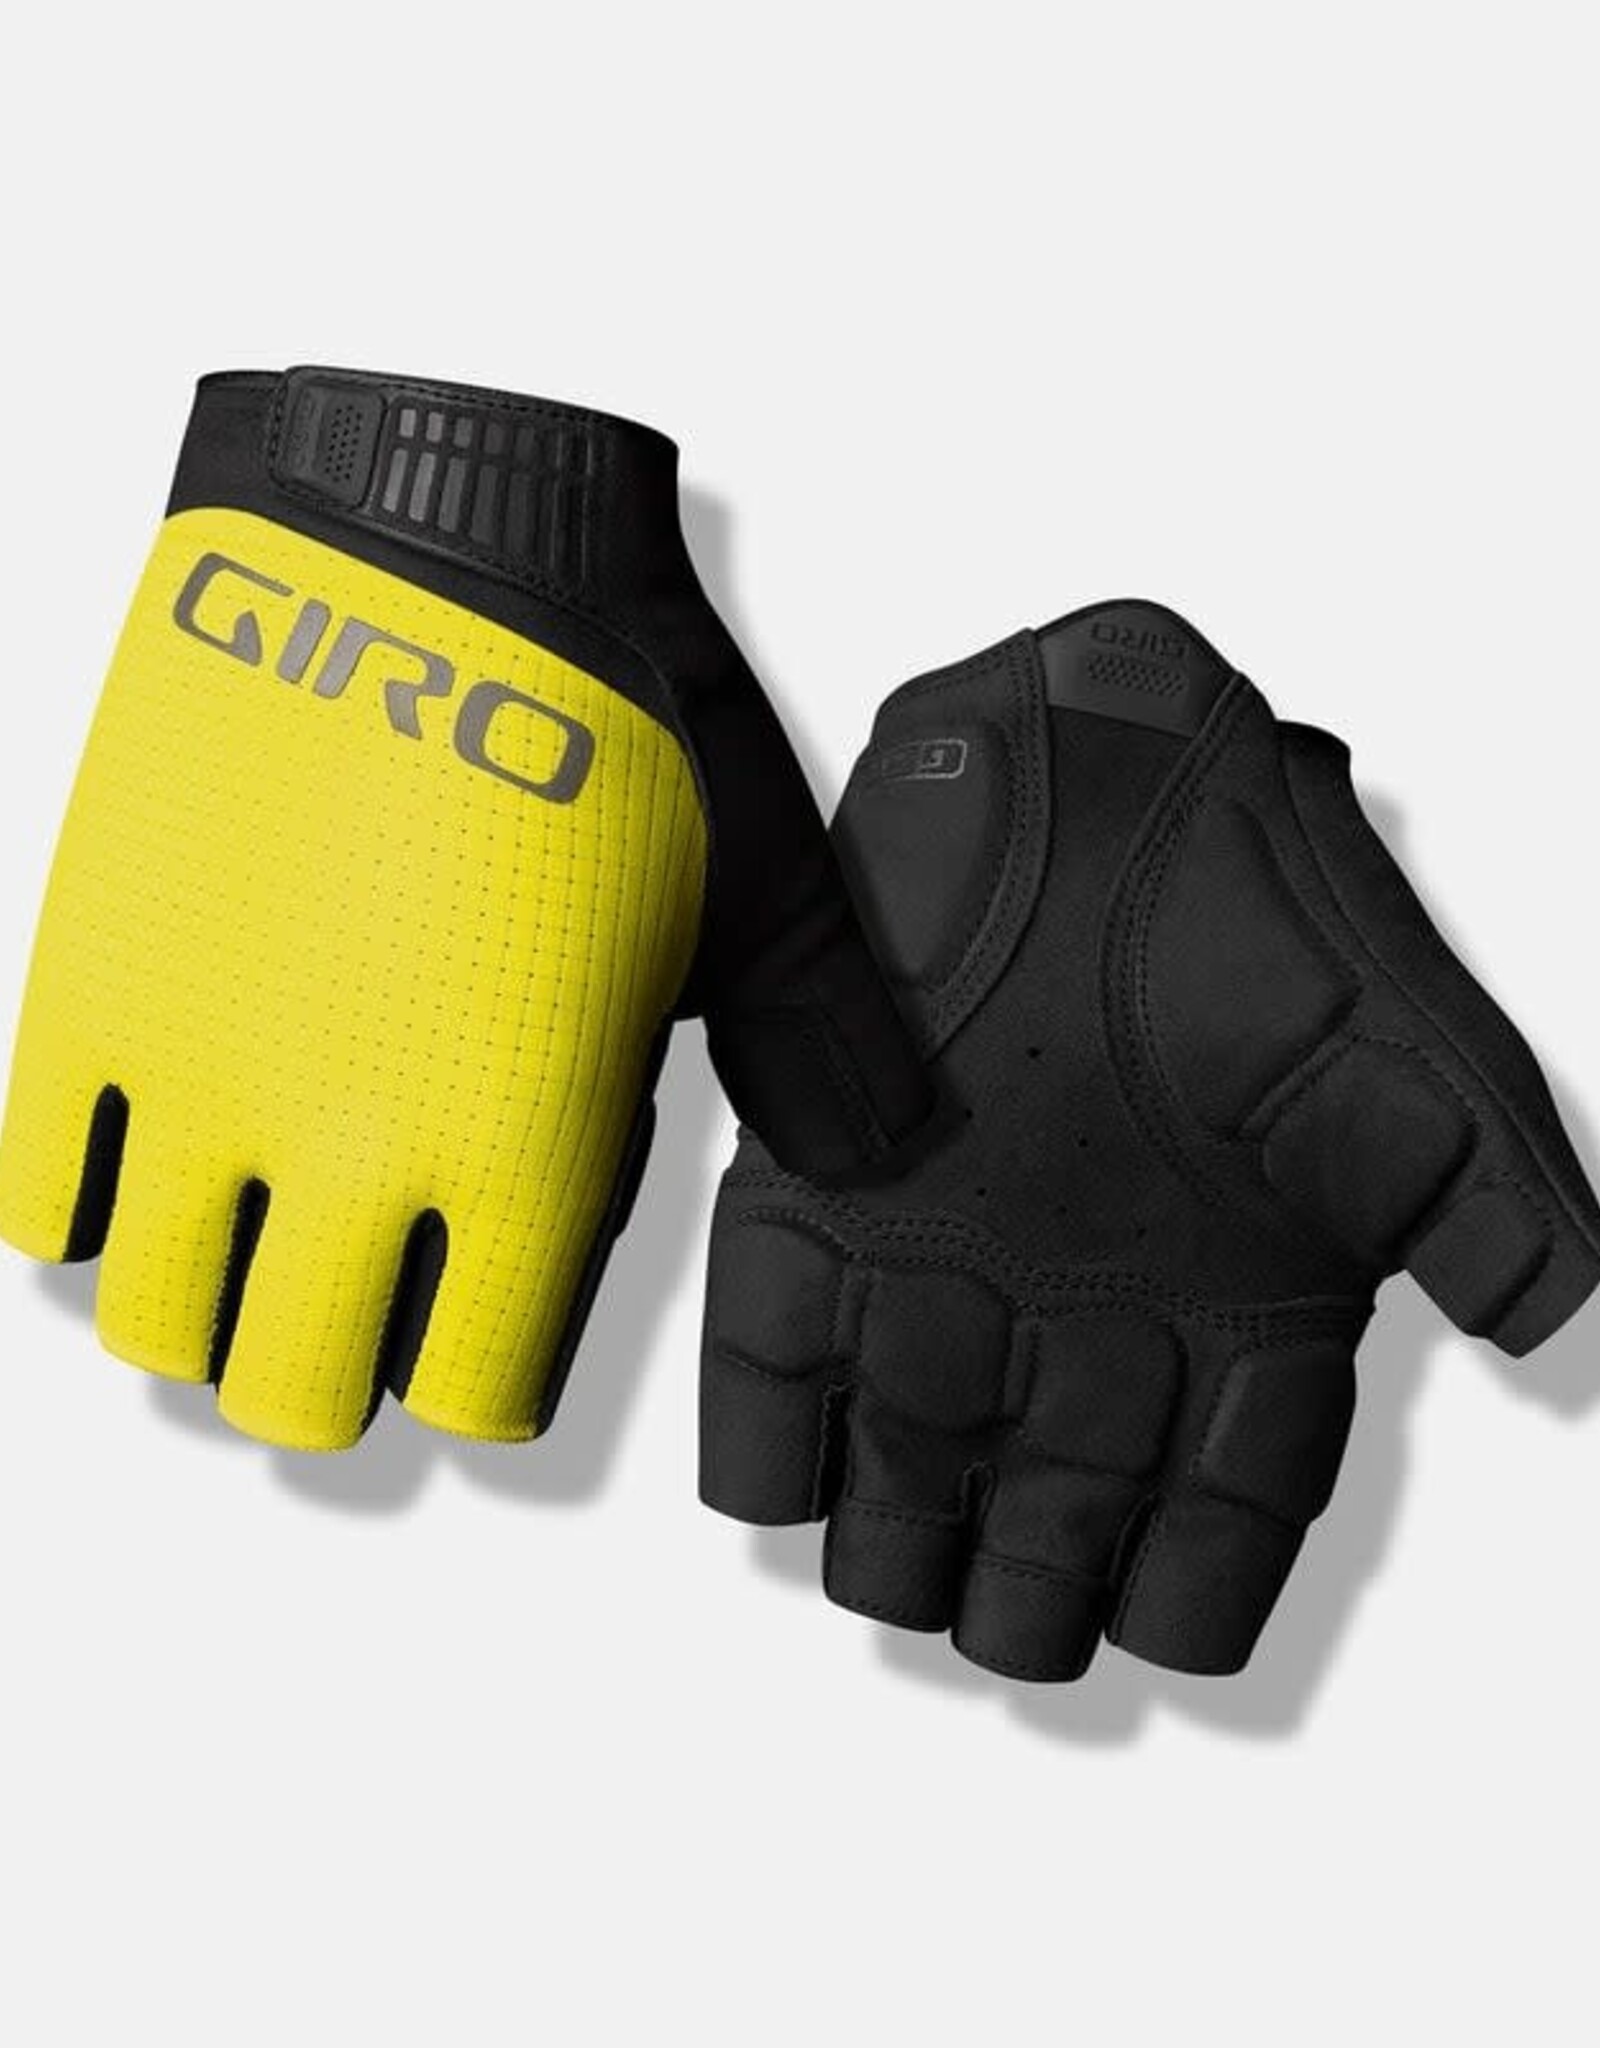 Giro Bravo II Gel Glove Highlight Yellow L 7160157